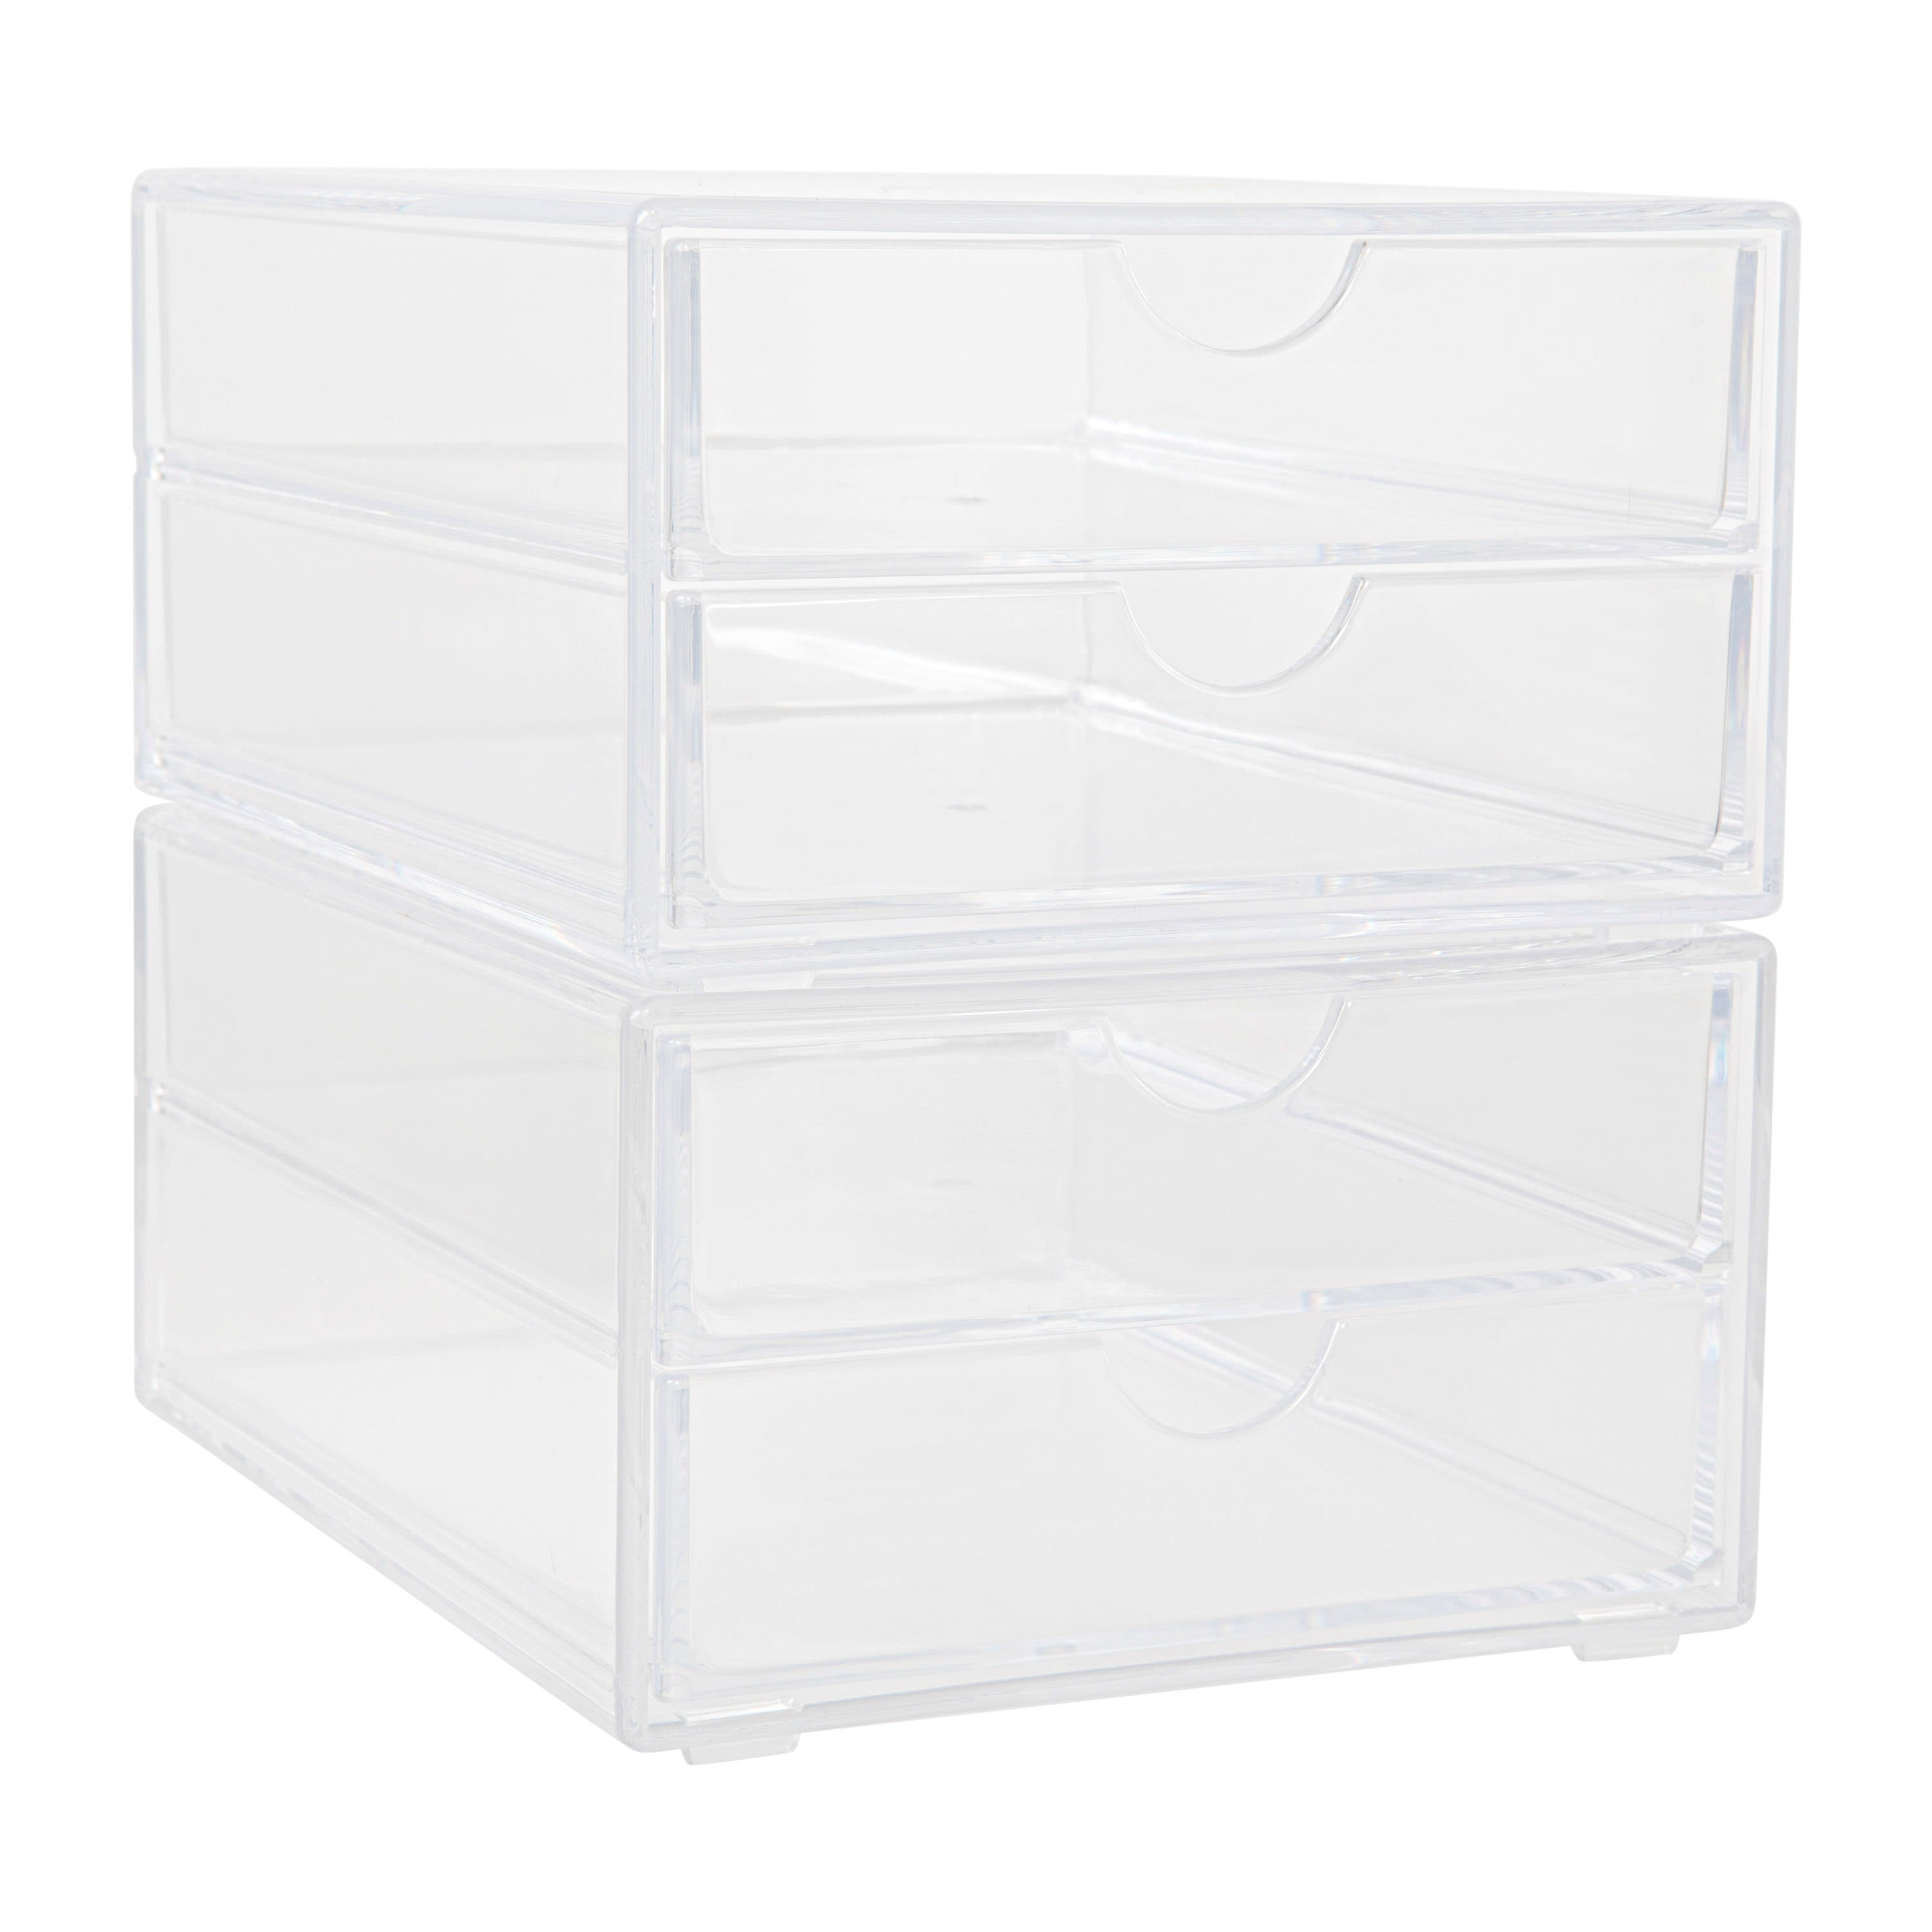 Desk Organizer Drawers Storage Box Clear Plastic Container